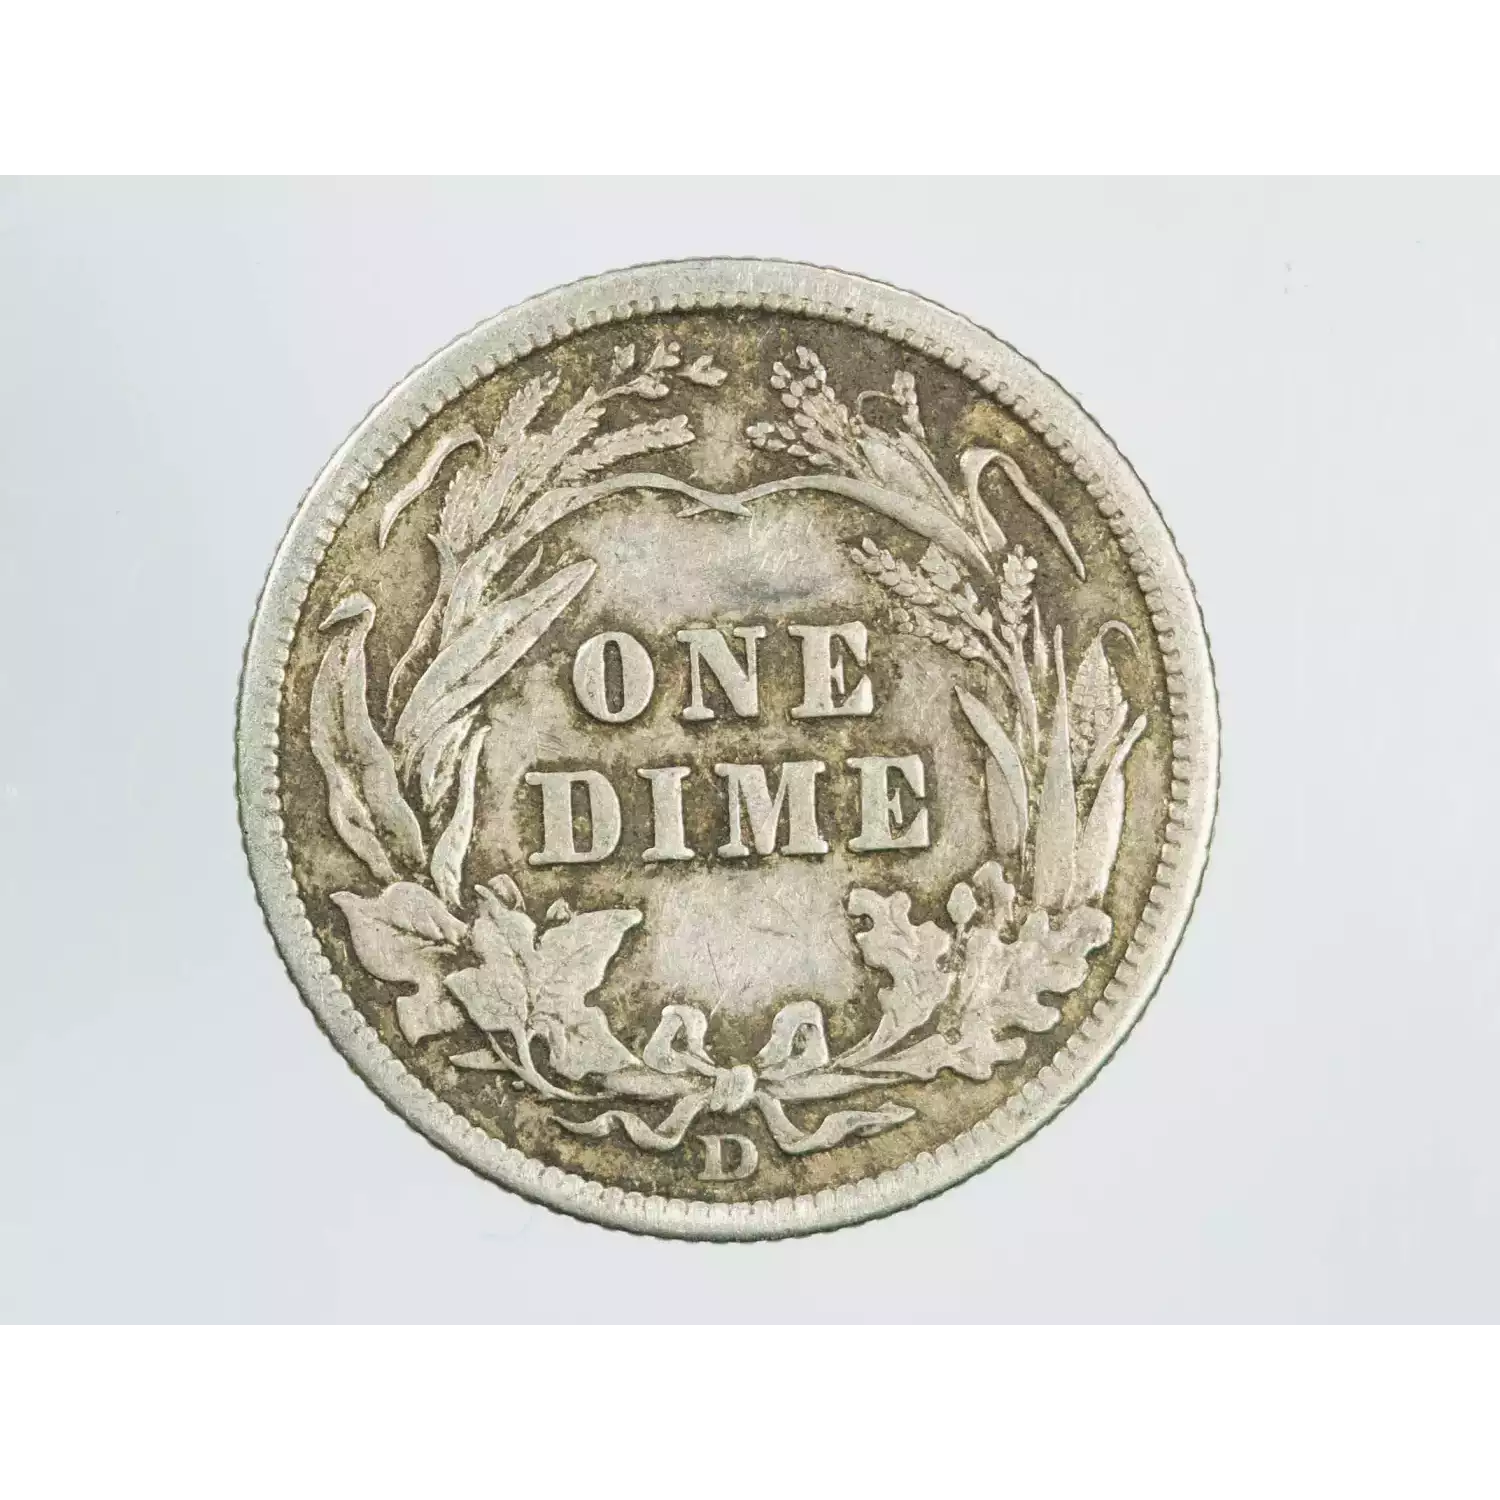 Dimes---Barber or Liberty Head 1892-1916 -Silver- 1 Dime (2)